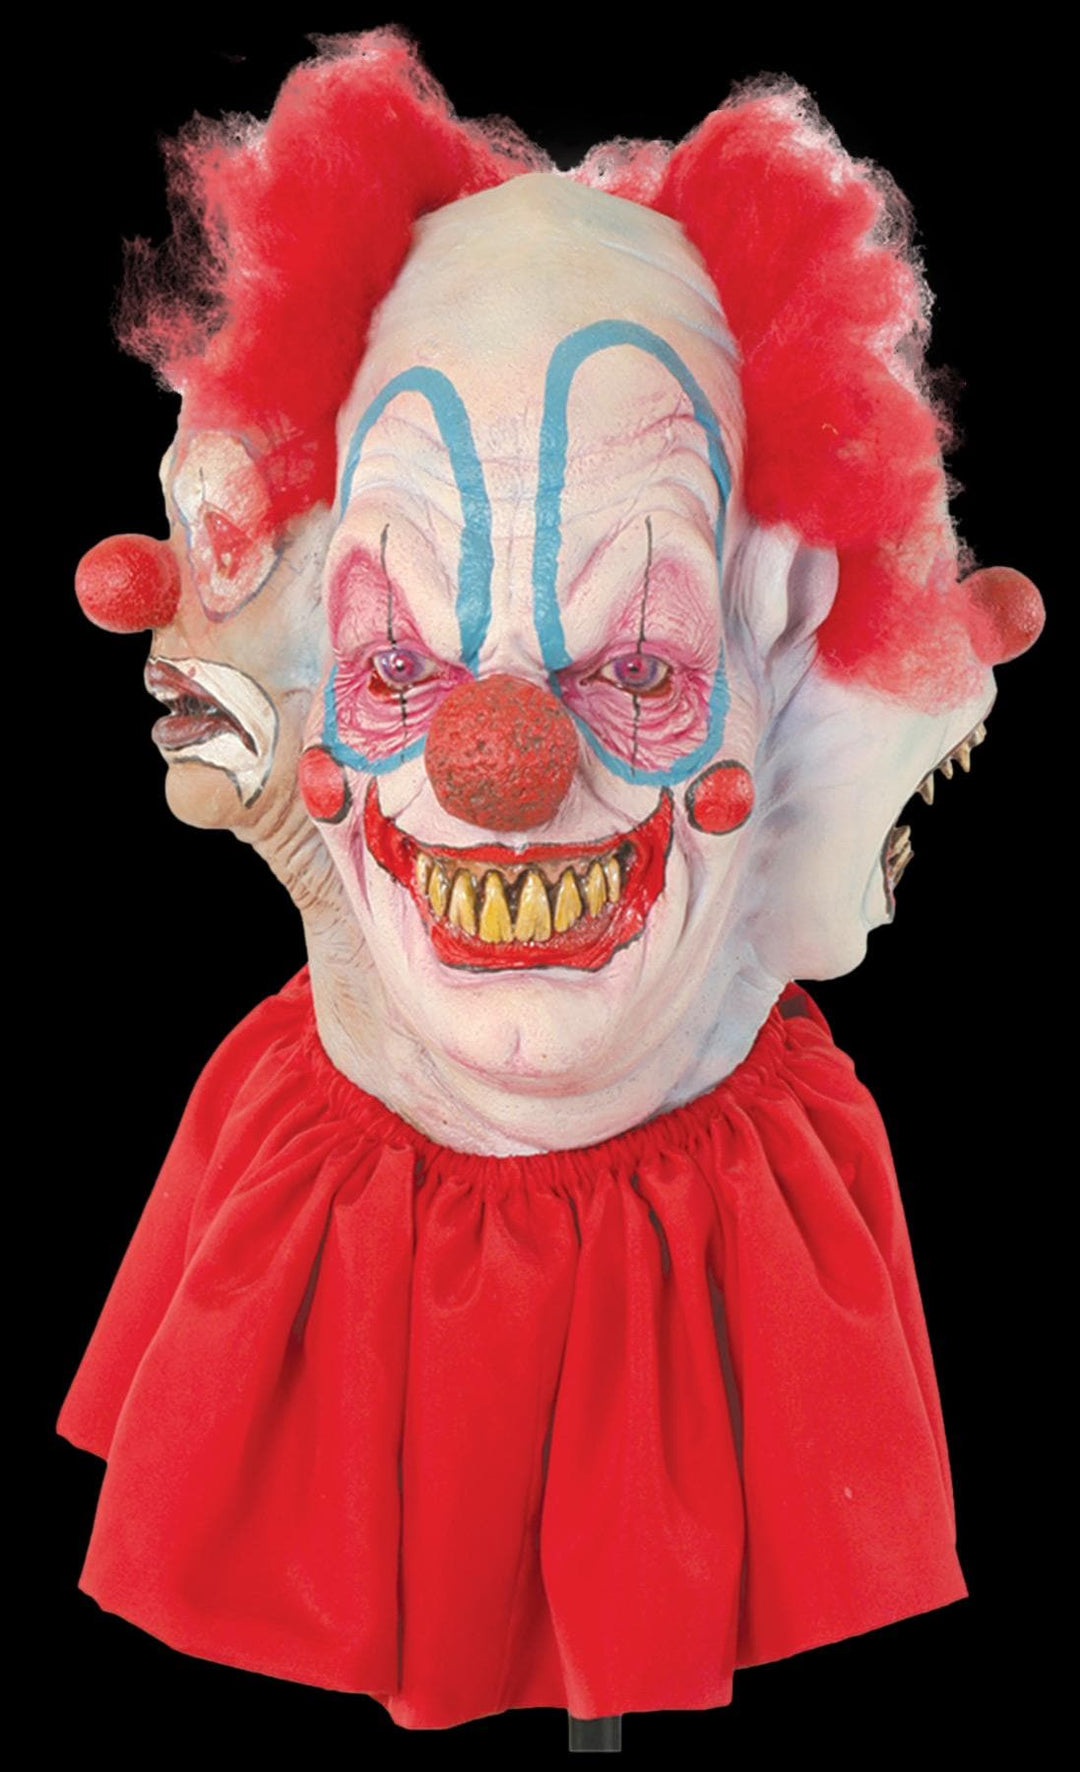 Halloween Mask "Clownin' Around" Deluxe Clown Mask